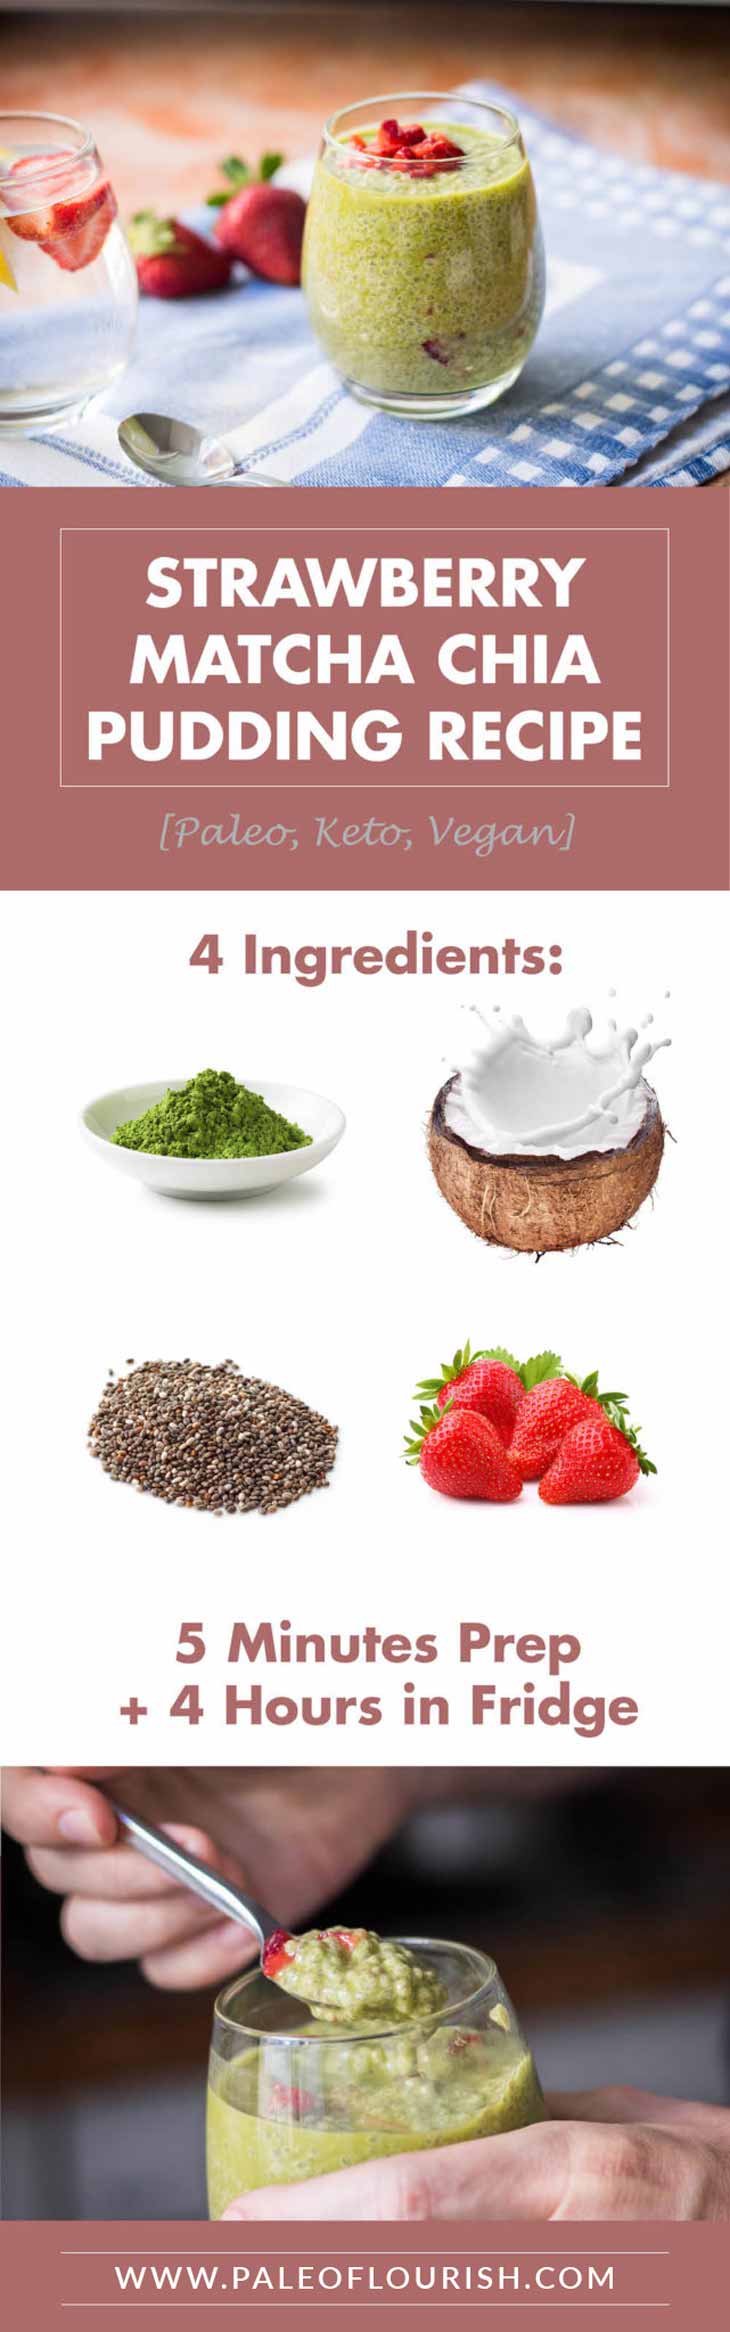 Strawberry Matcha Chia Pudding Recipe Infographic #paleo #keto #recipe https://paleoflourish.com/strawberry-matcha-chia-pudding-recipe-paleo-keto-vegan